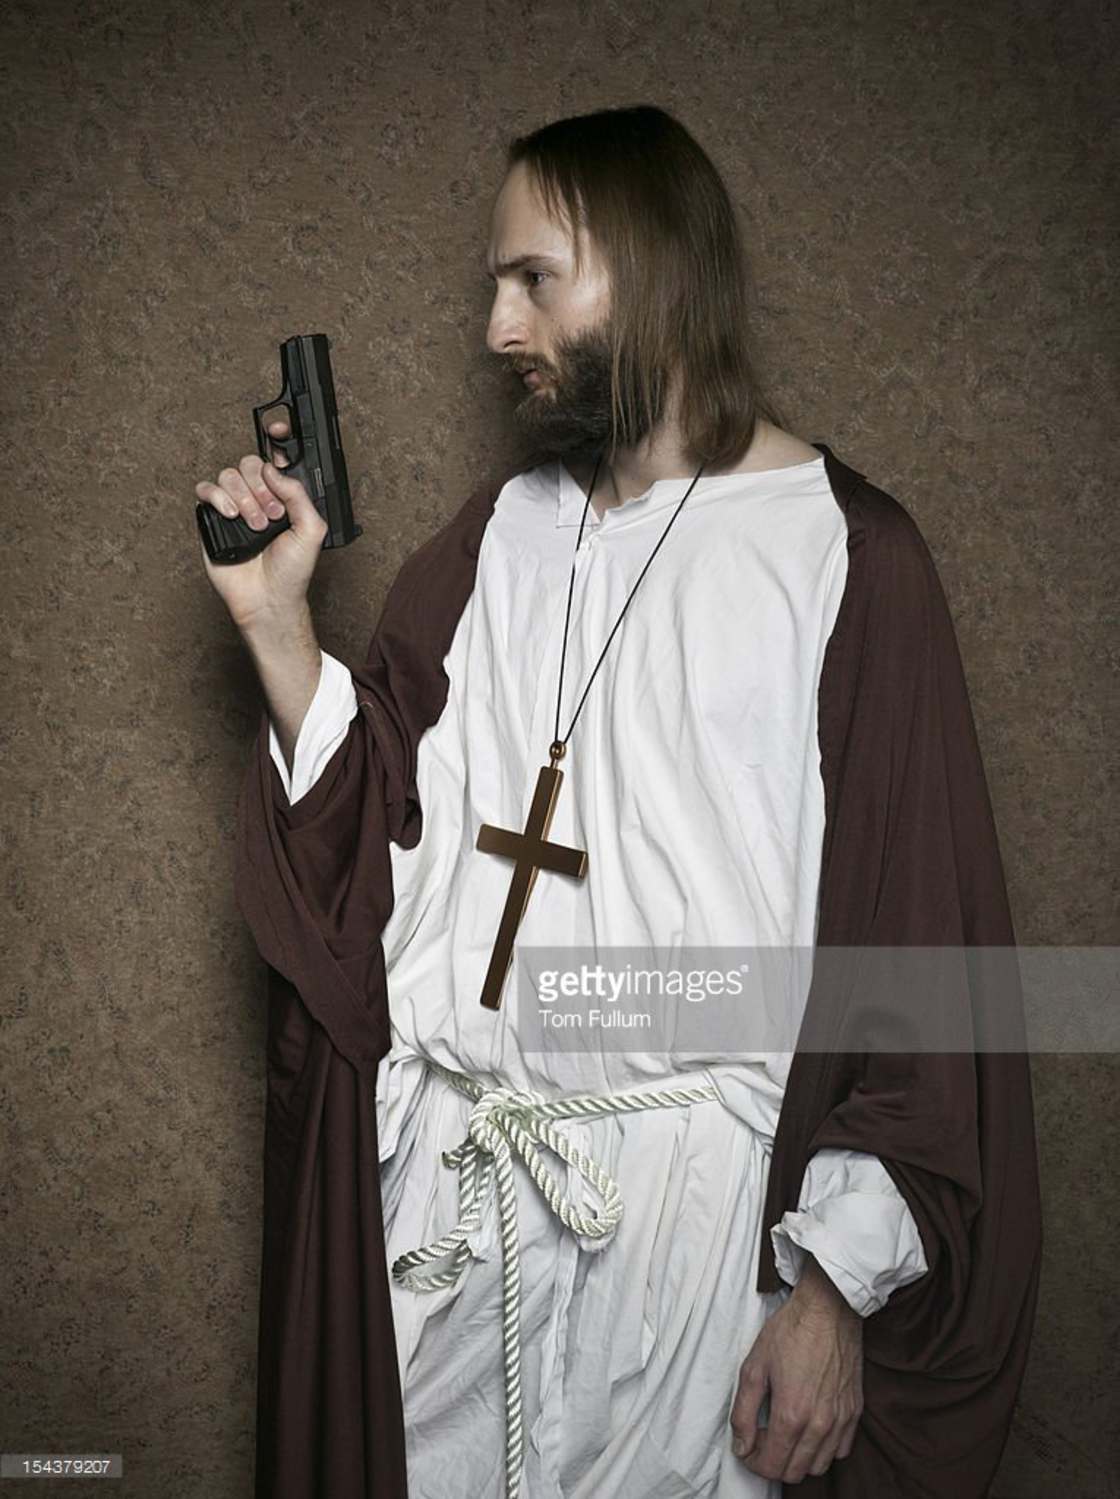 Priest with a gun